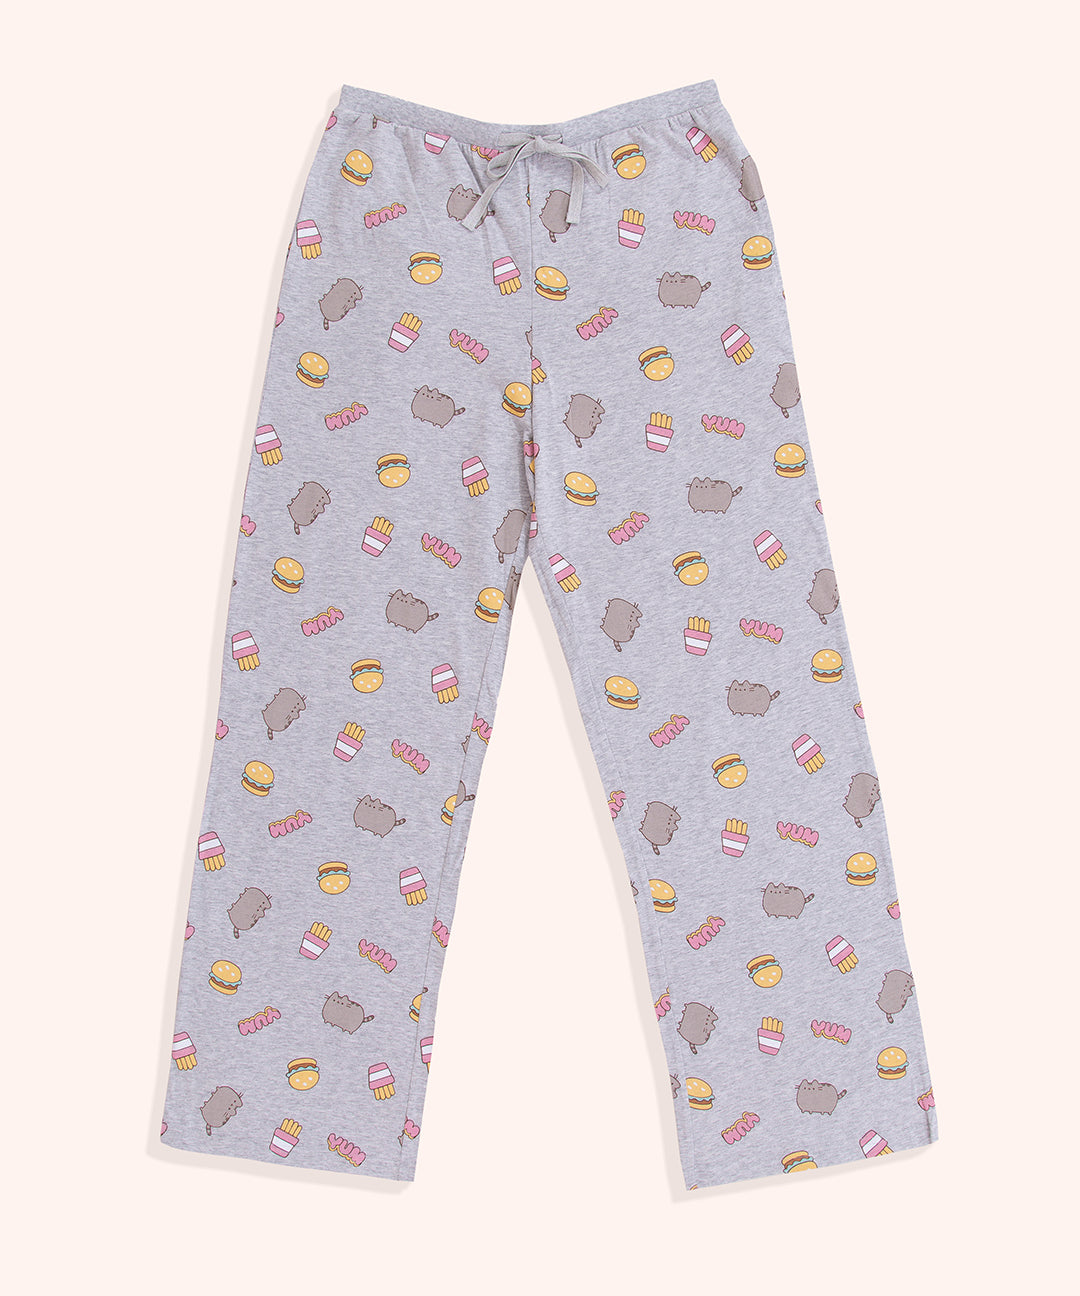 Women's Tank Top and Fuzzy Pajama Pants, Sleepwear and Loungewear Set  Medium, Ivory